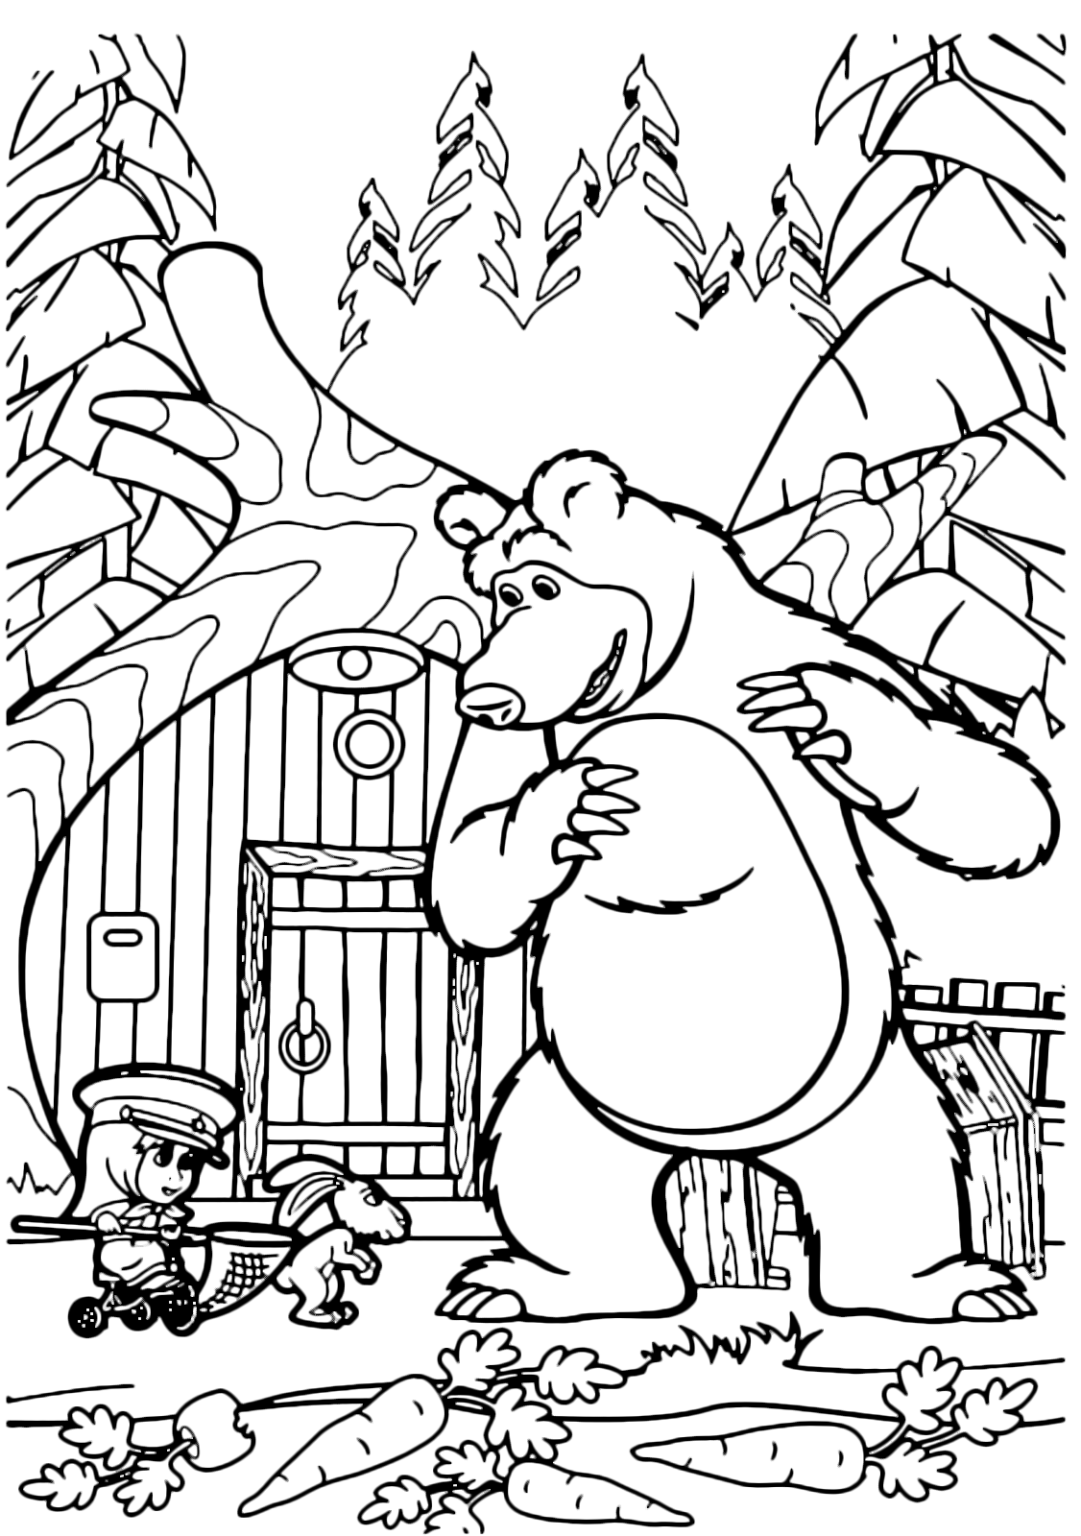 Раскраска. Маша и медведь. Маша раскраска Маша и медведь. Раскраски из мультфильмов Маша и медведь. Маша и медведь рисунок. Раскраски маша и медведь распечатать формат а4